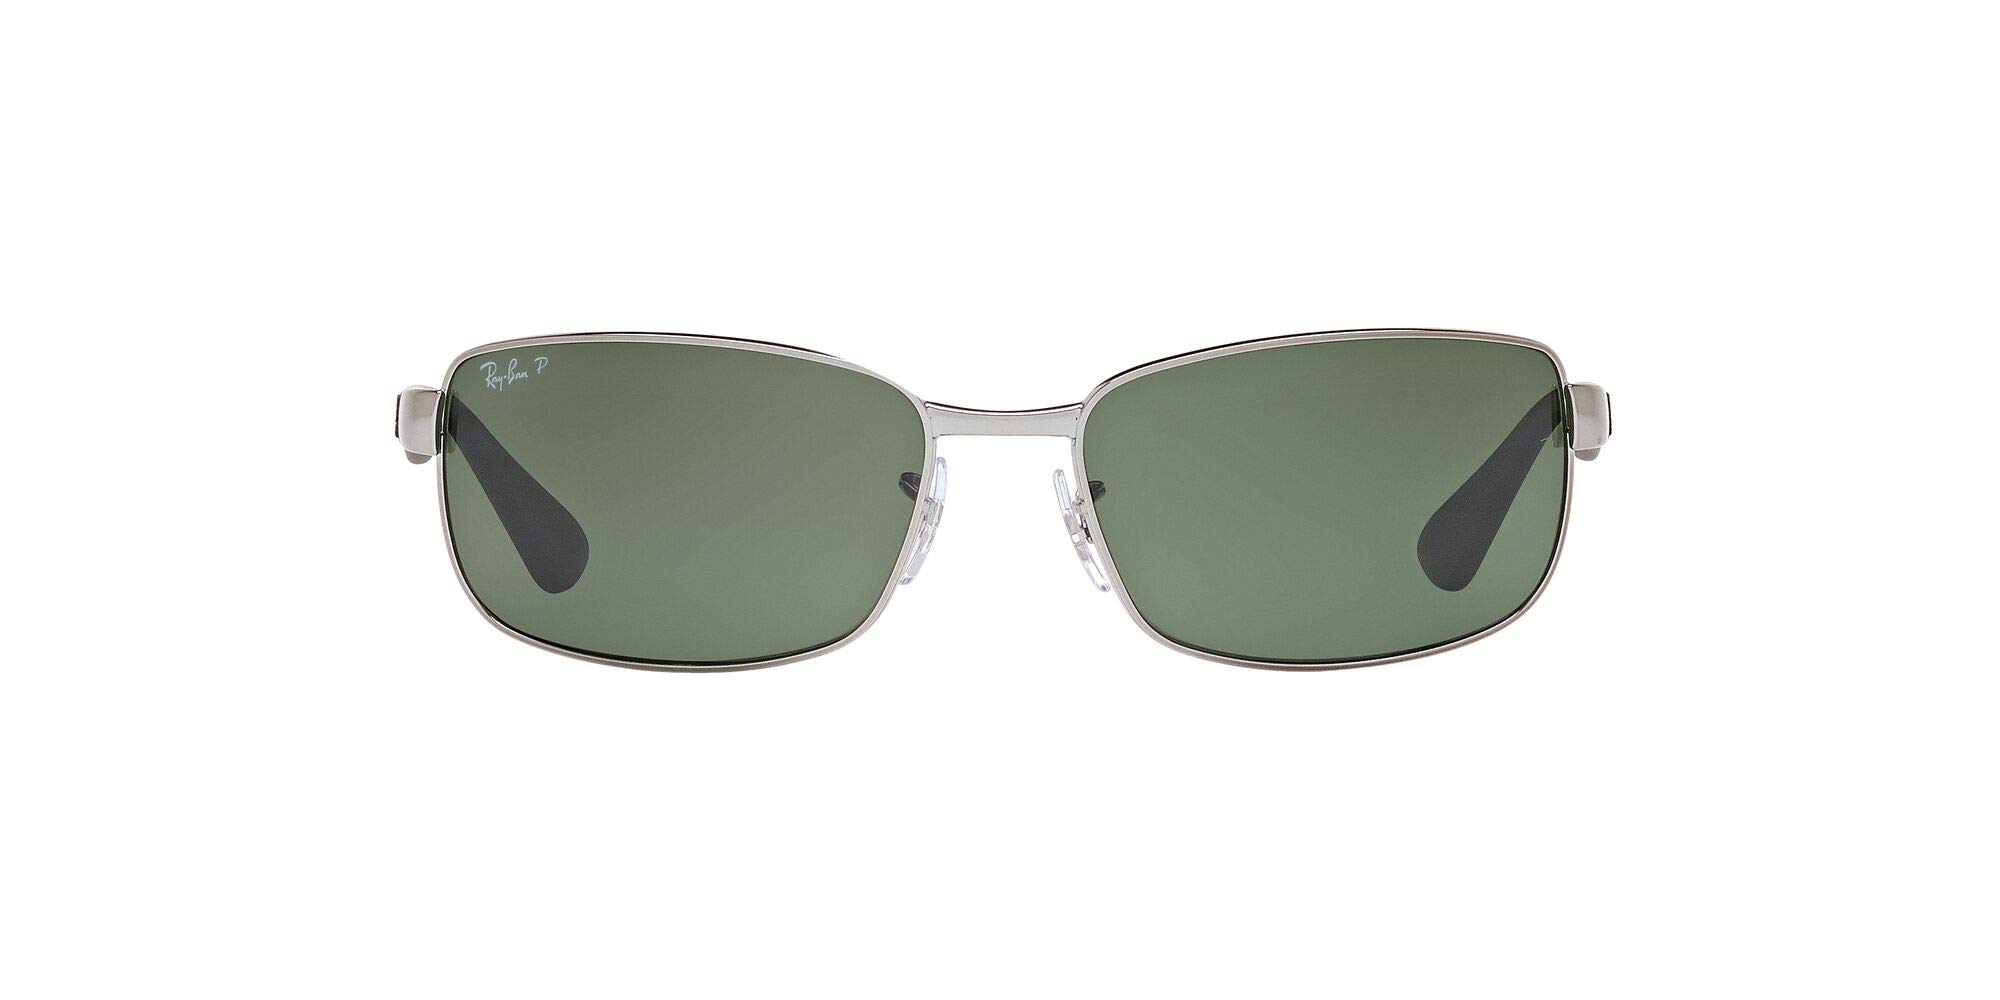 Ray-Ban RB3478 Rectangular Sunglasses, Gunmetal/Green Polarized, 60 mm $59.95